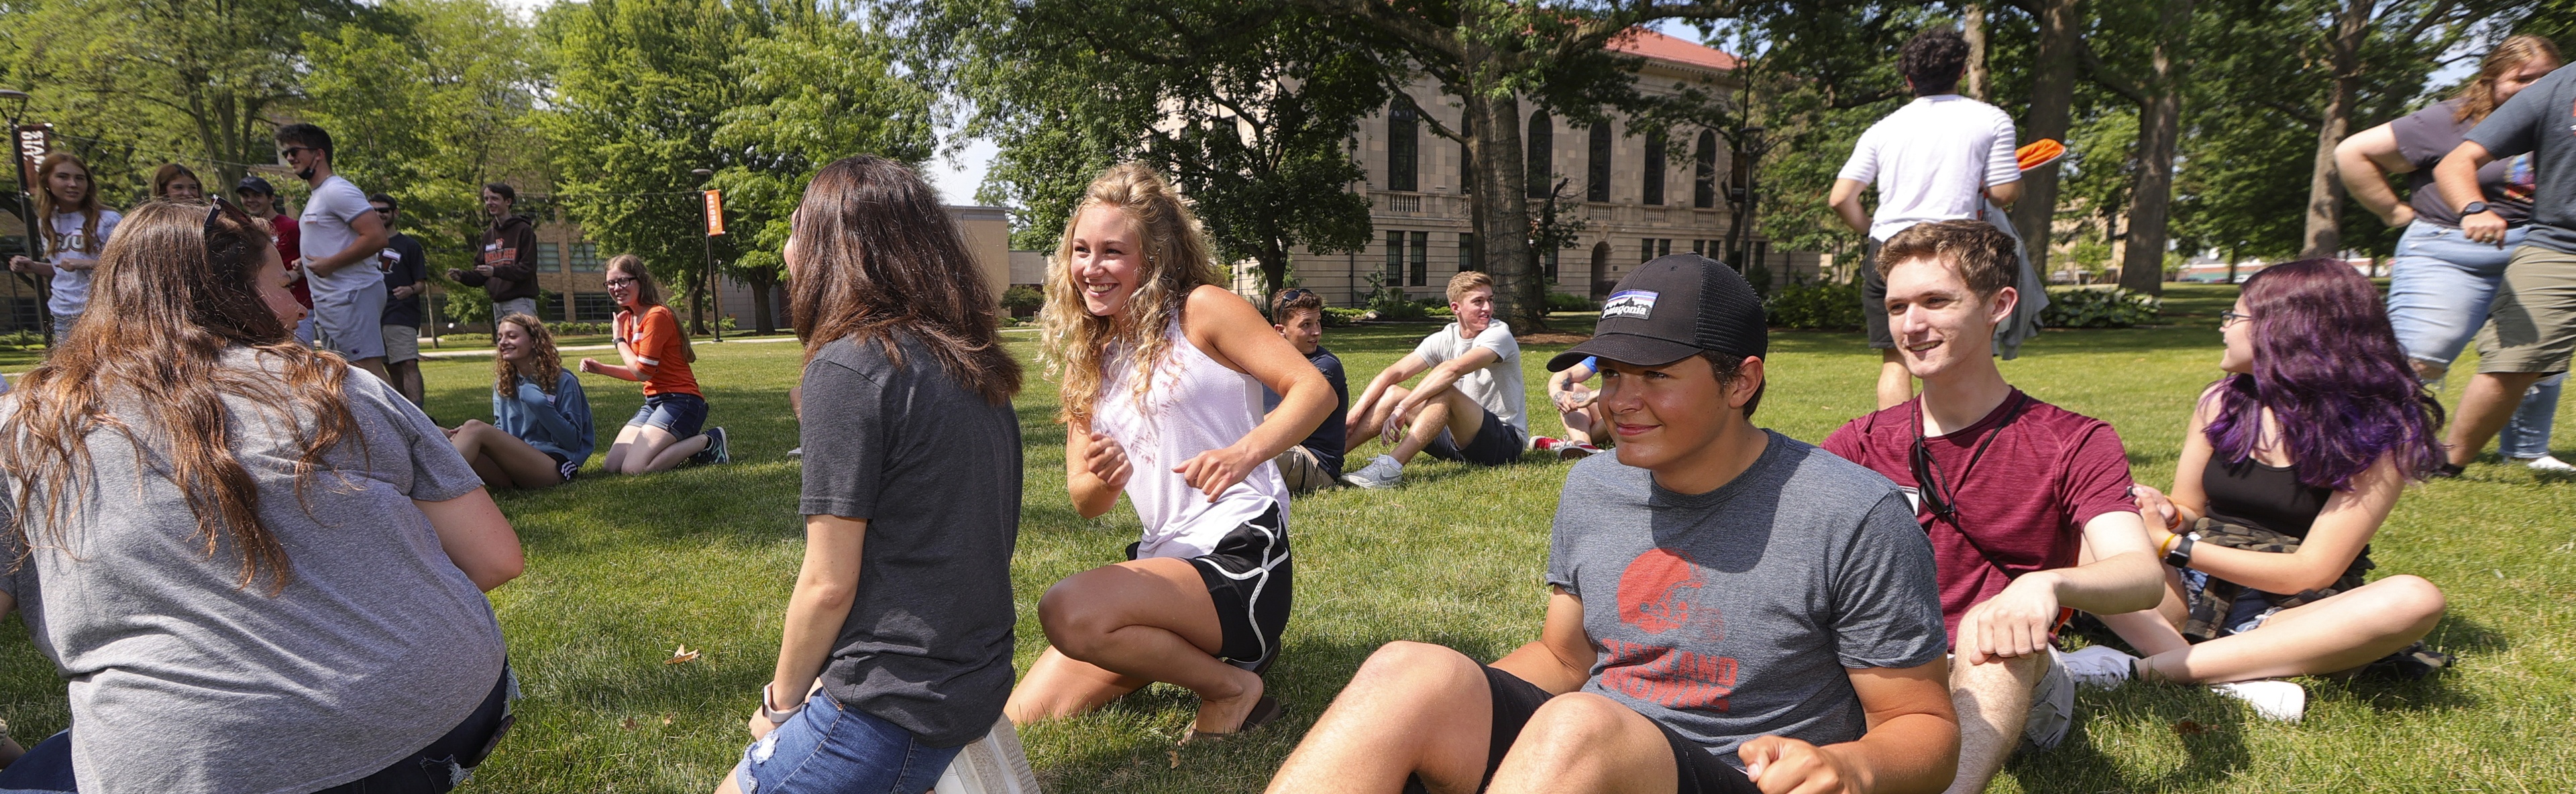 BGSU Students engaging in fun activities on campus